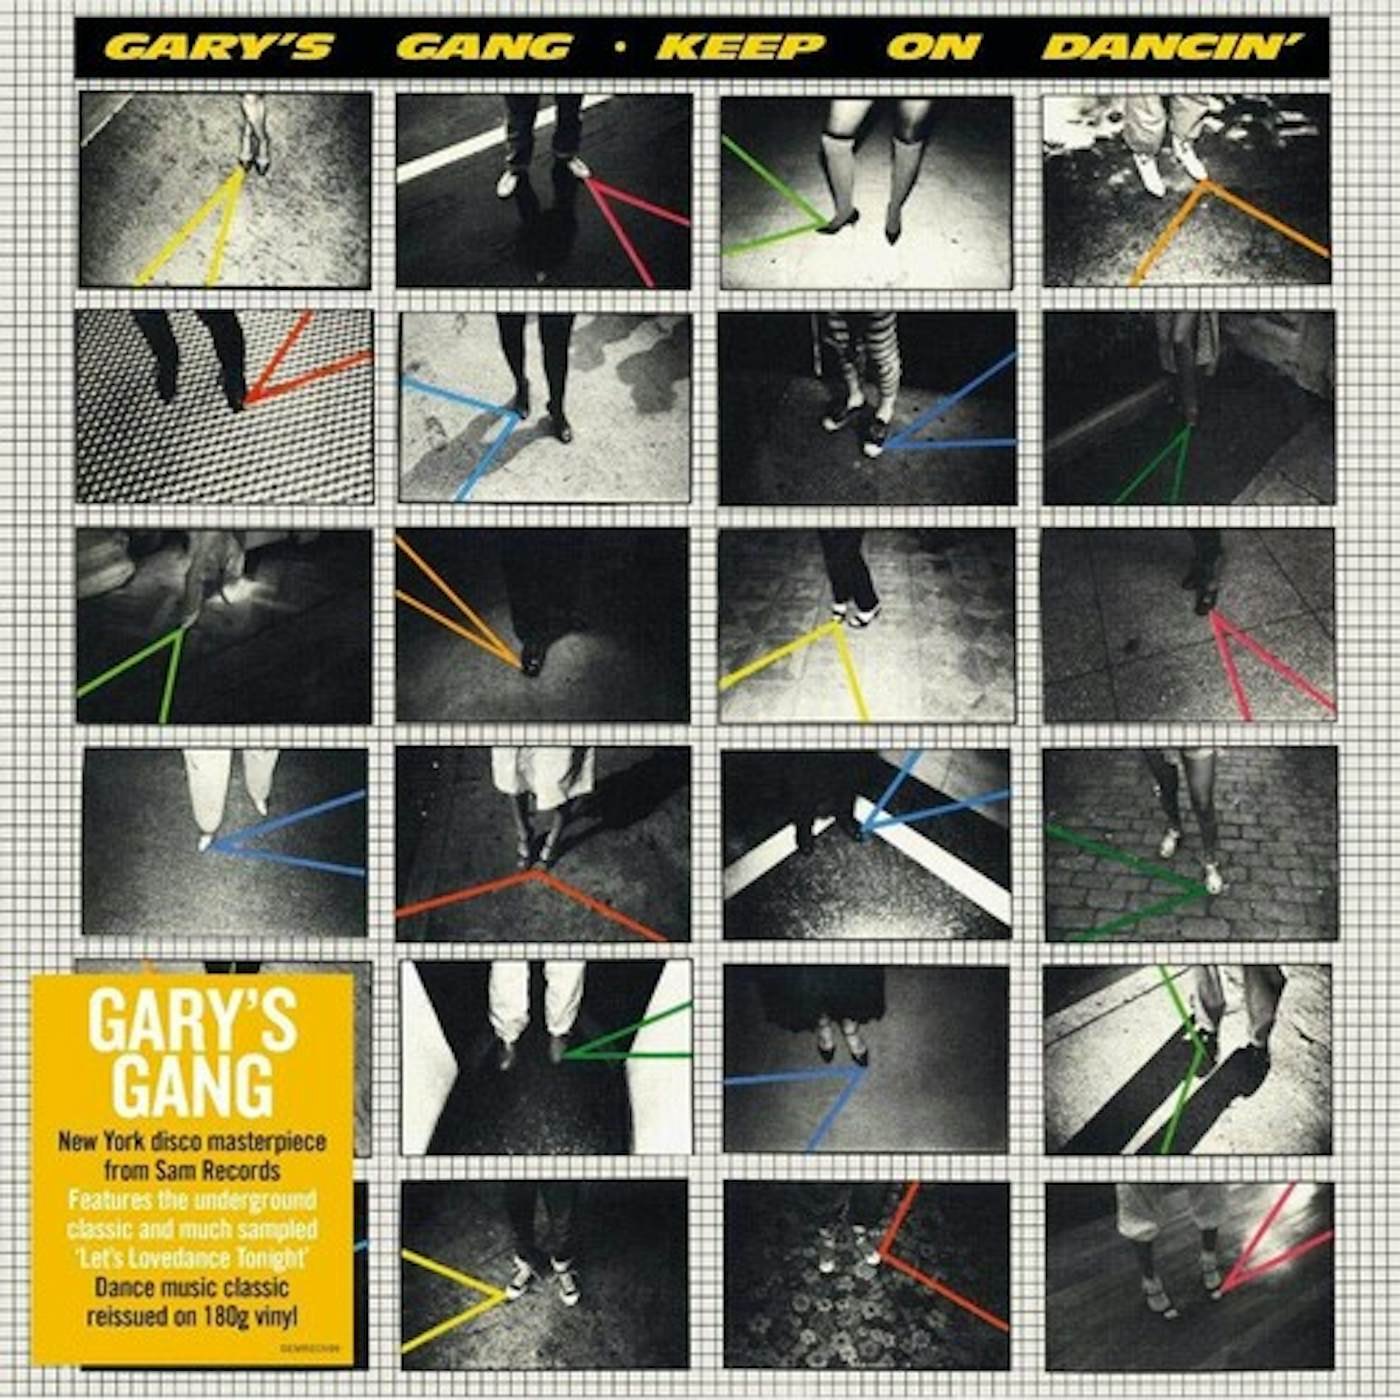 Gary's Gang KEEP ON DANCING Vinyl Record